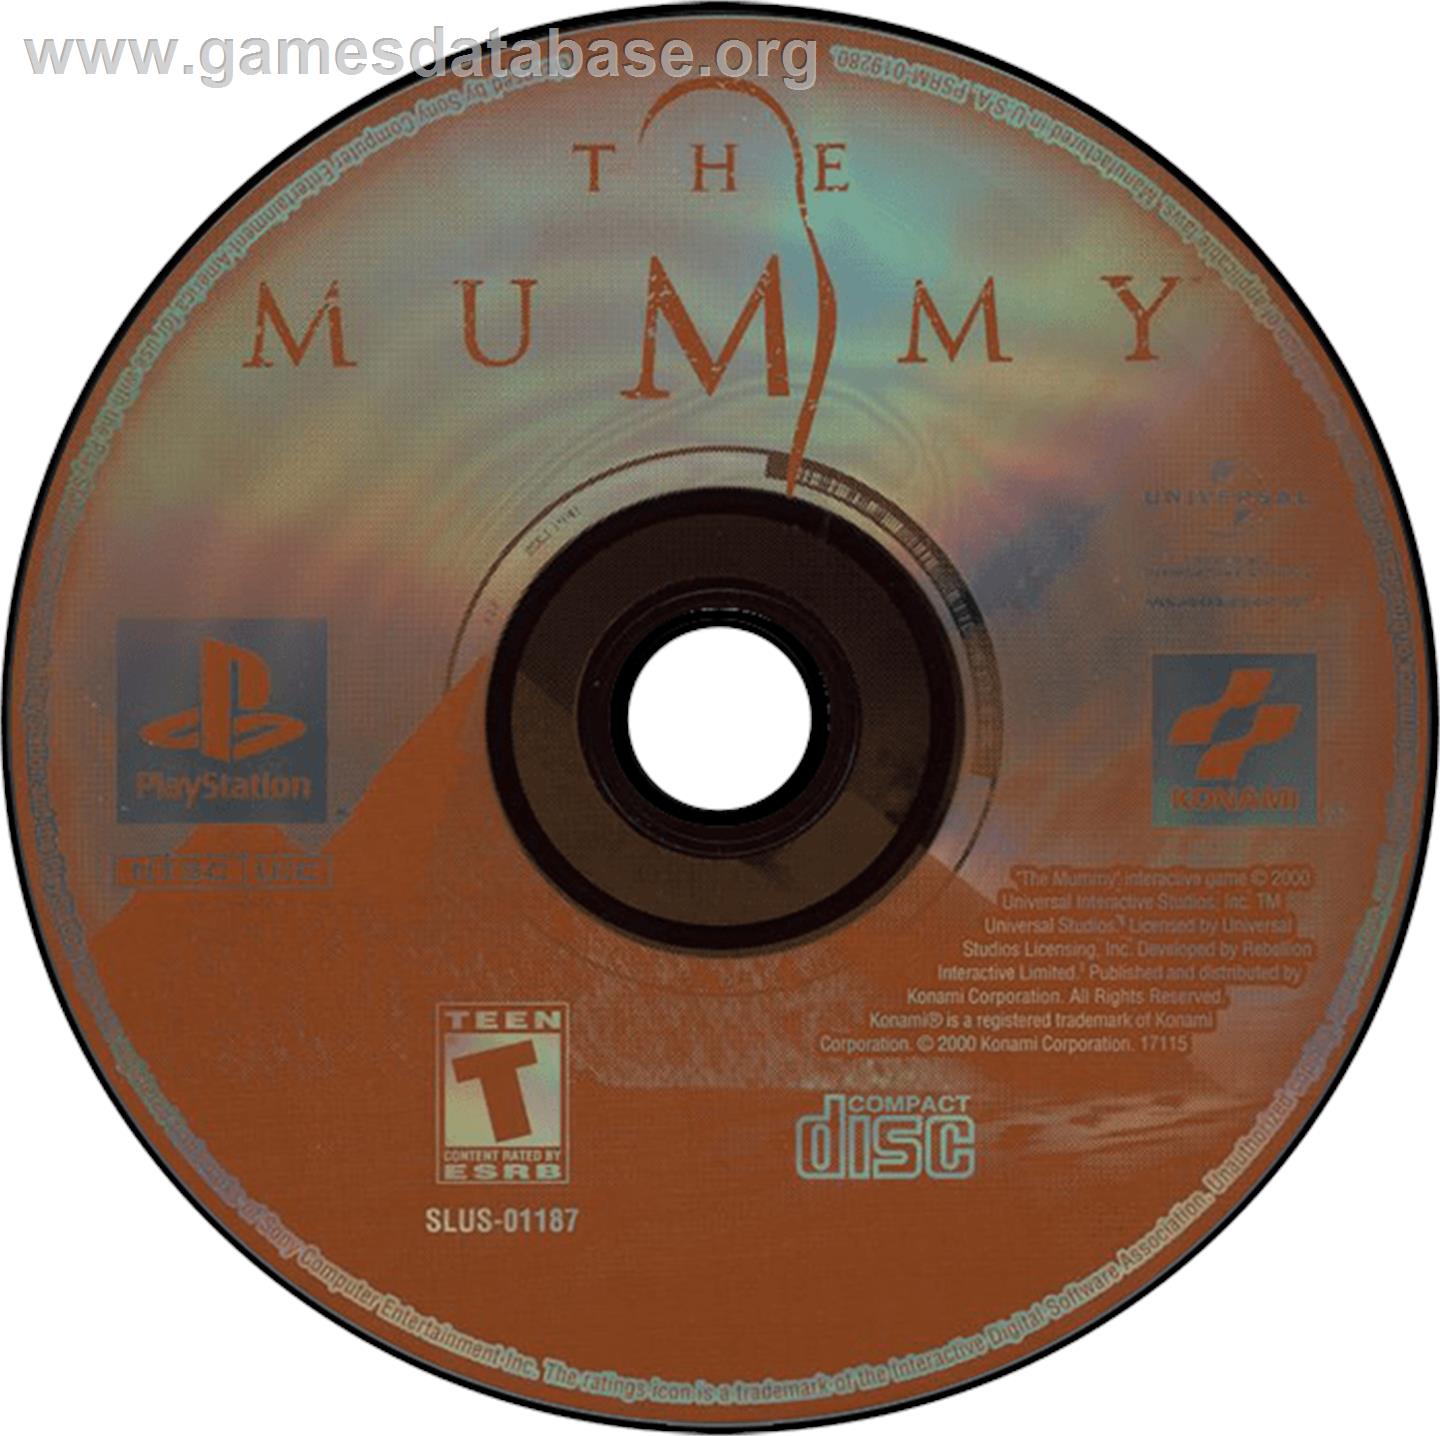 The Mummy - Sony Playstation - Artwork - Disc